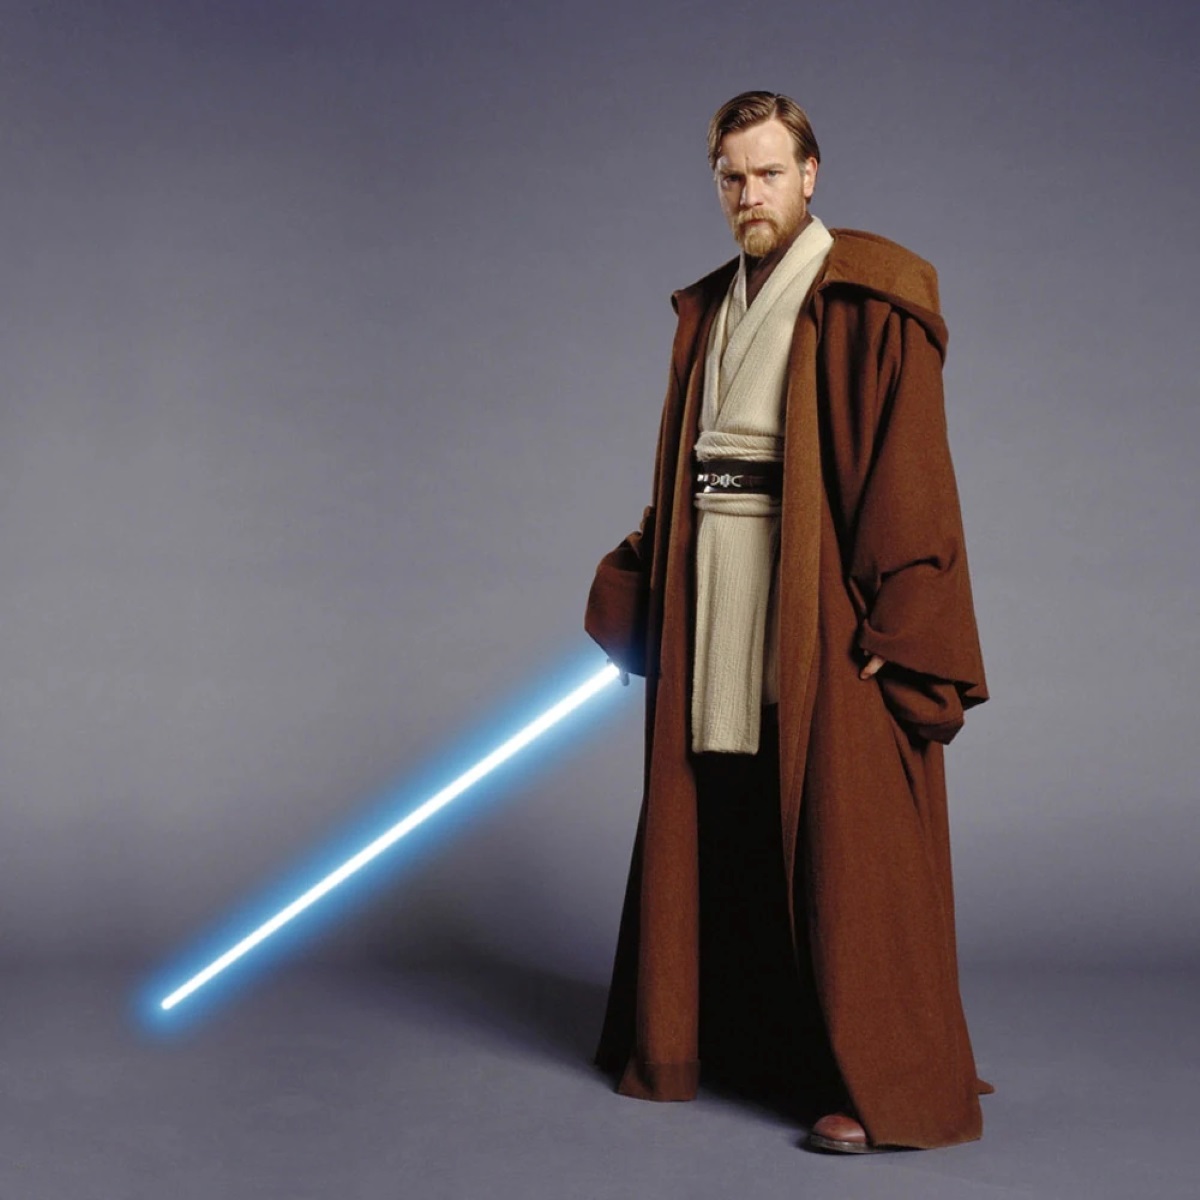 Ewan McGregor as Obi-Wan Kenobi7